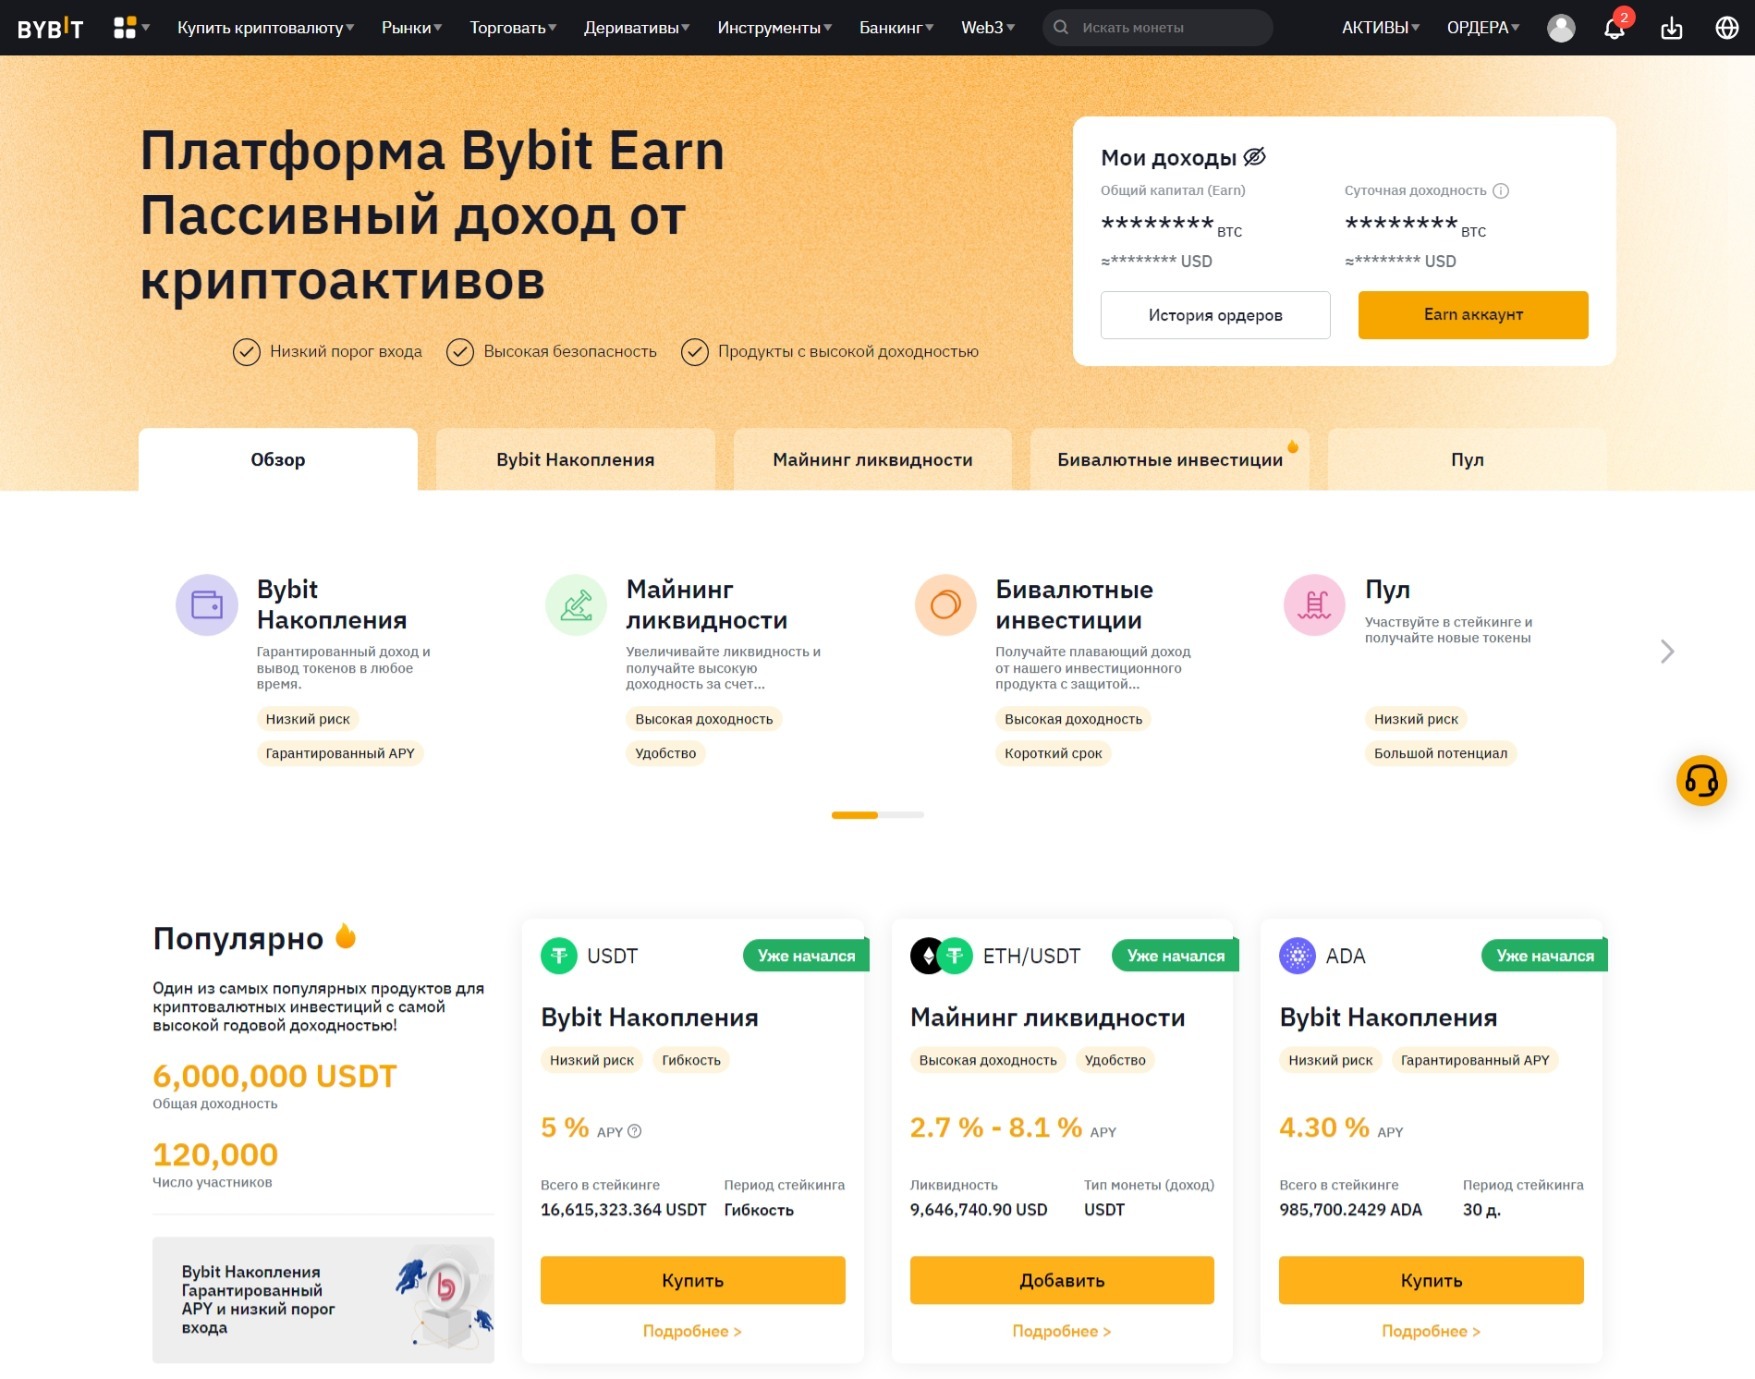 savefinance.ru and bybit.com